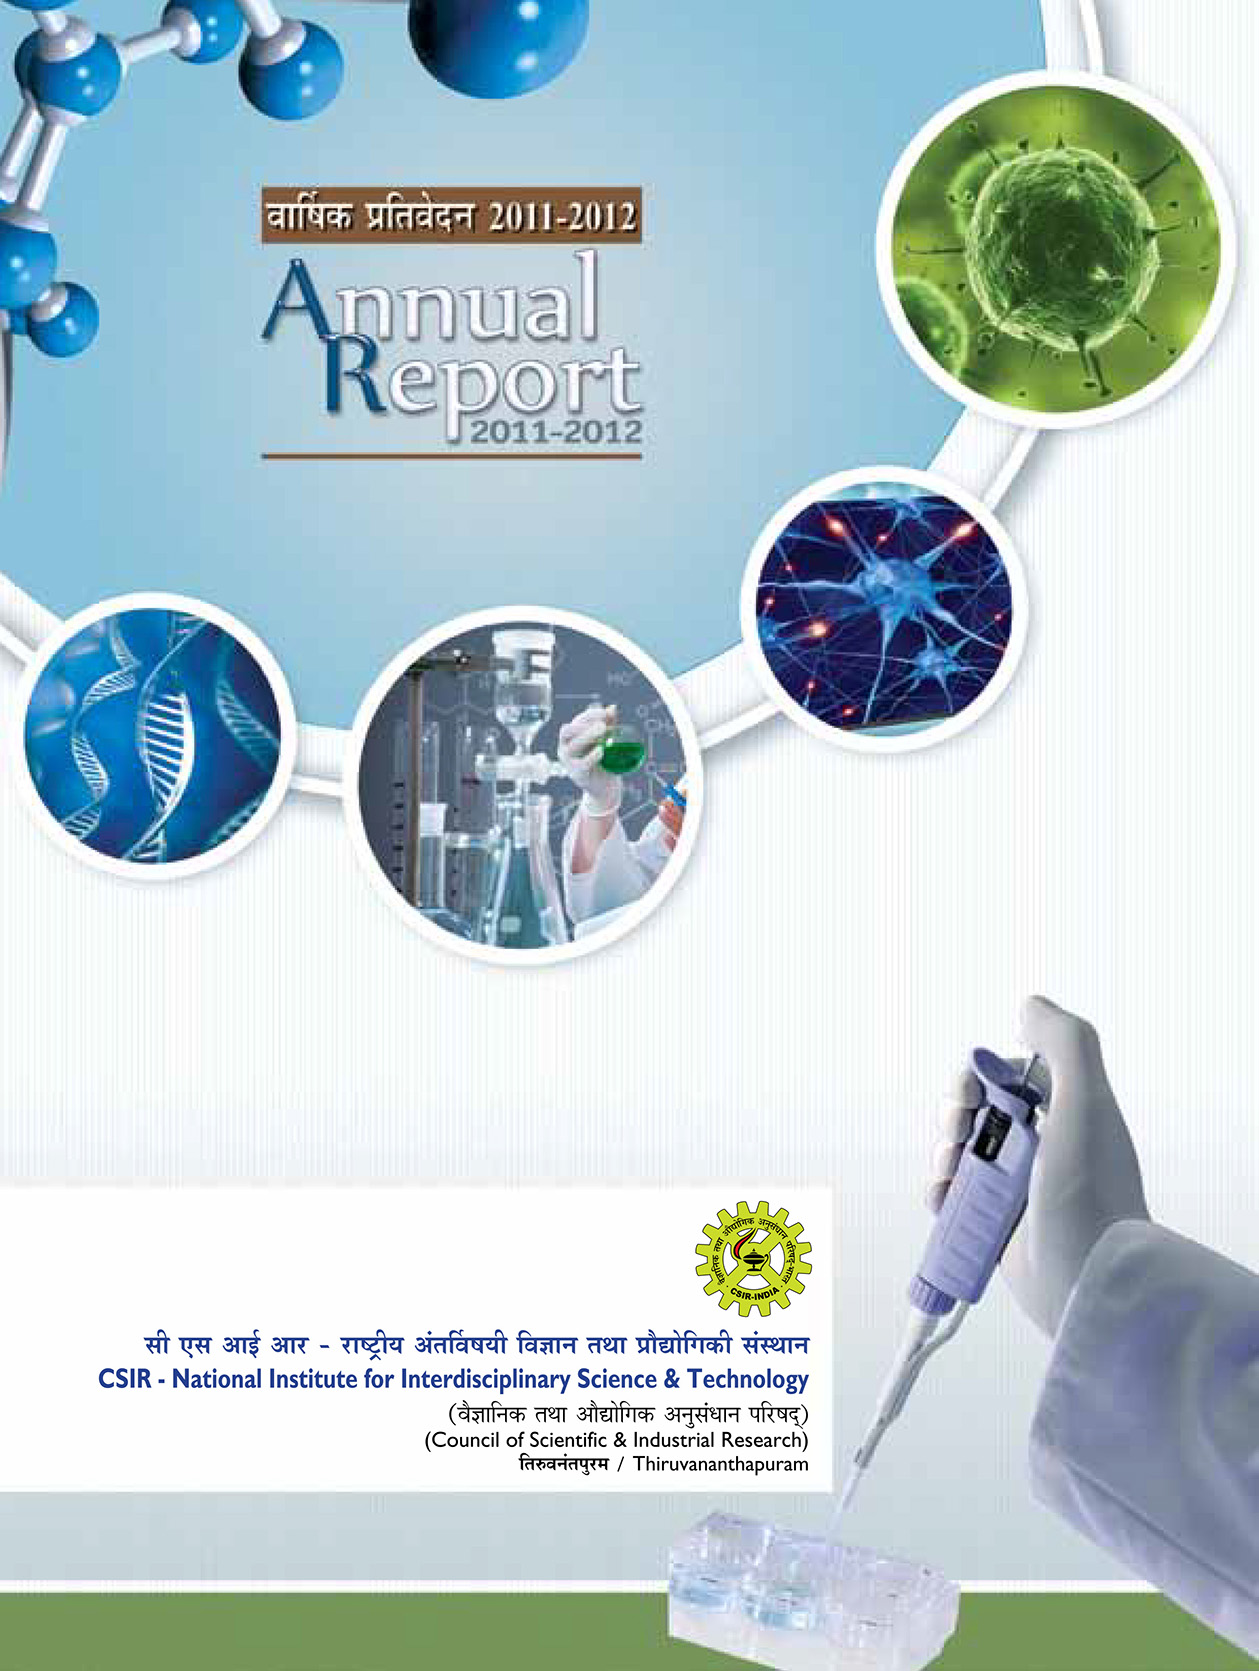 Annual Report 2011 - 2012